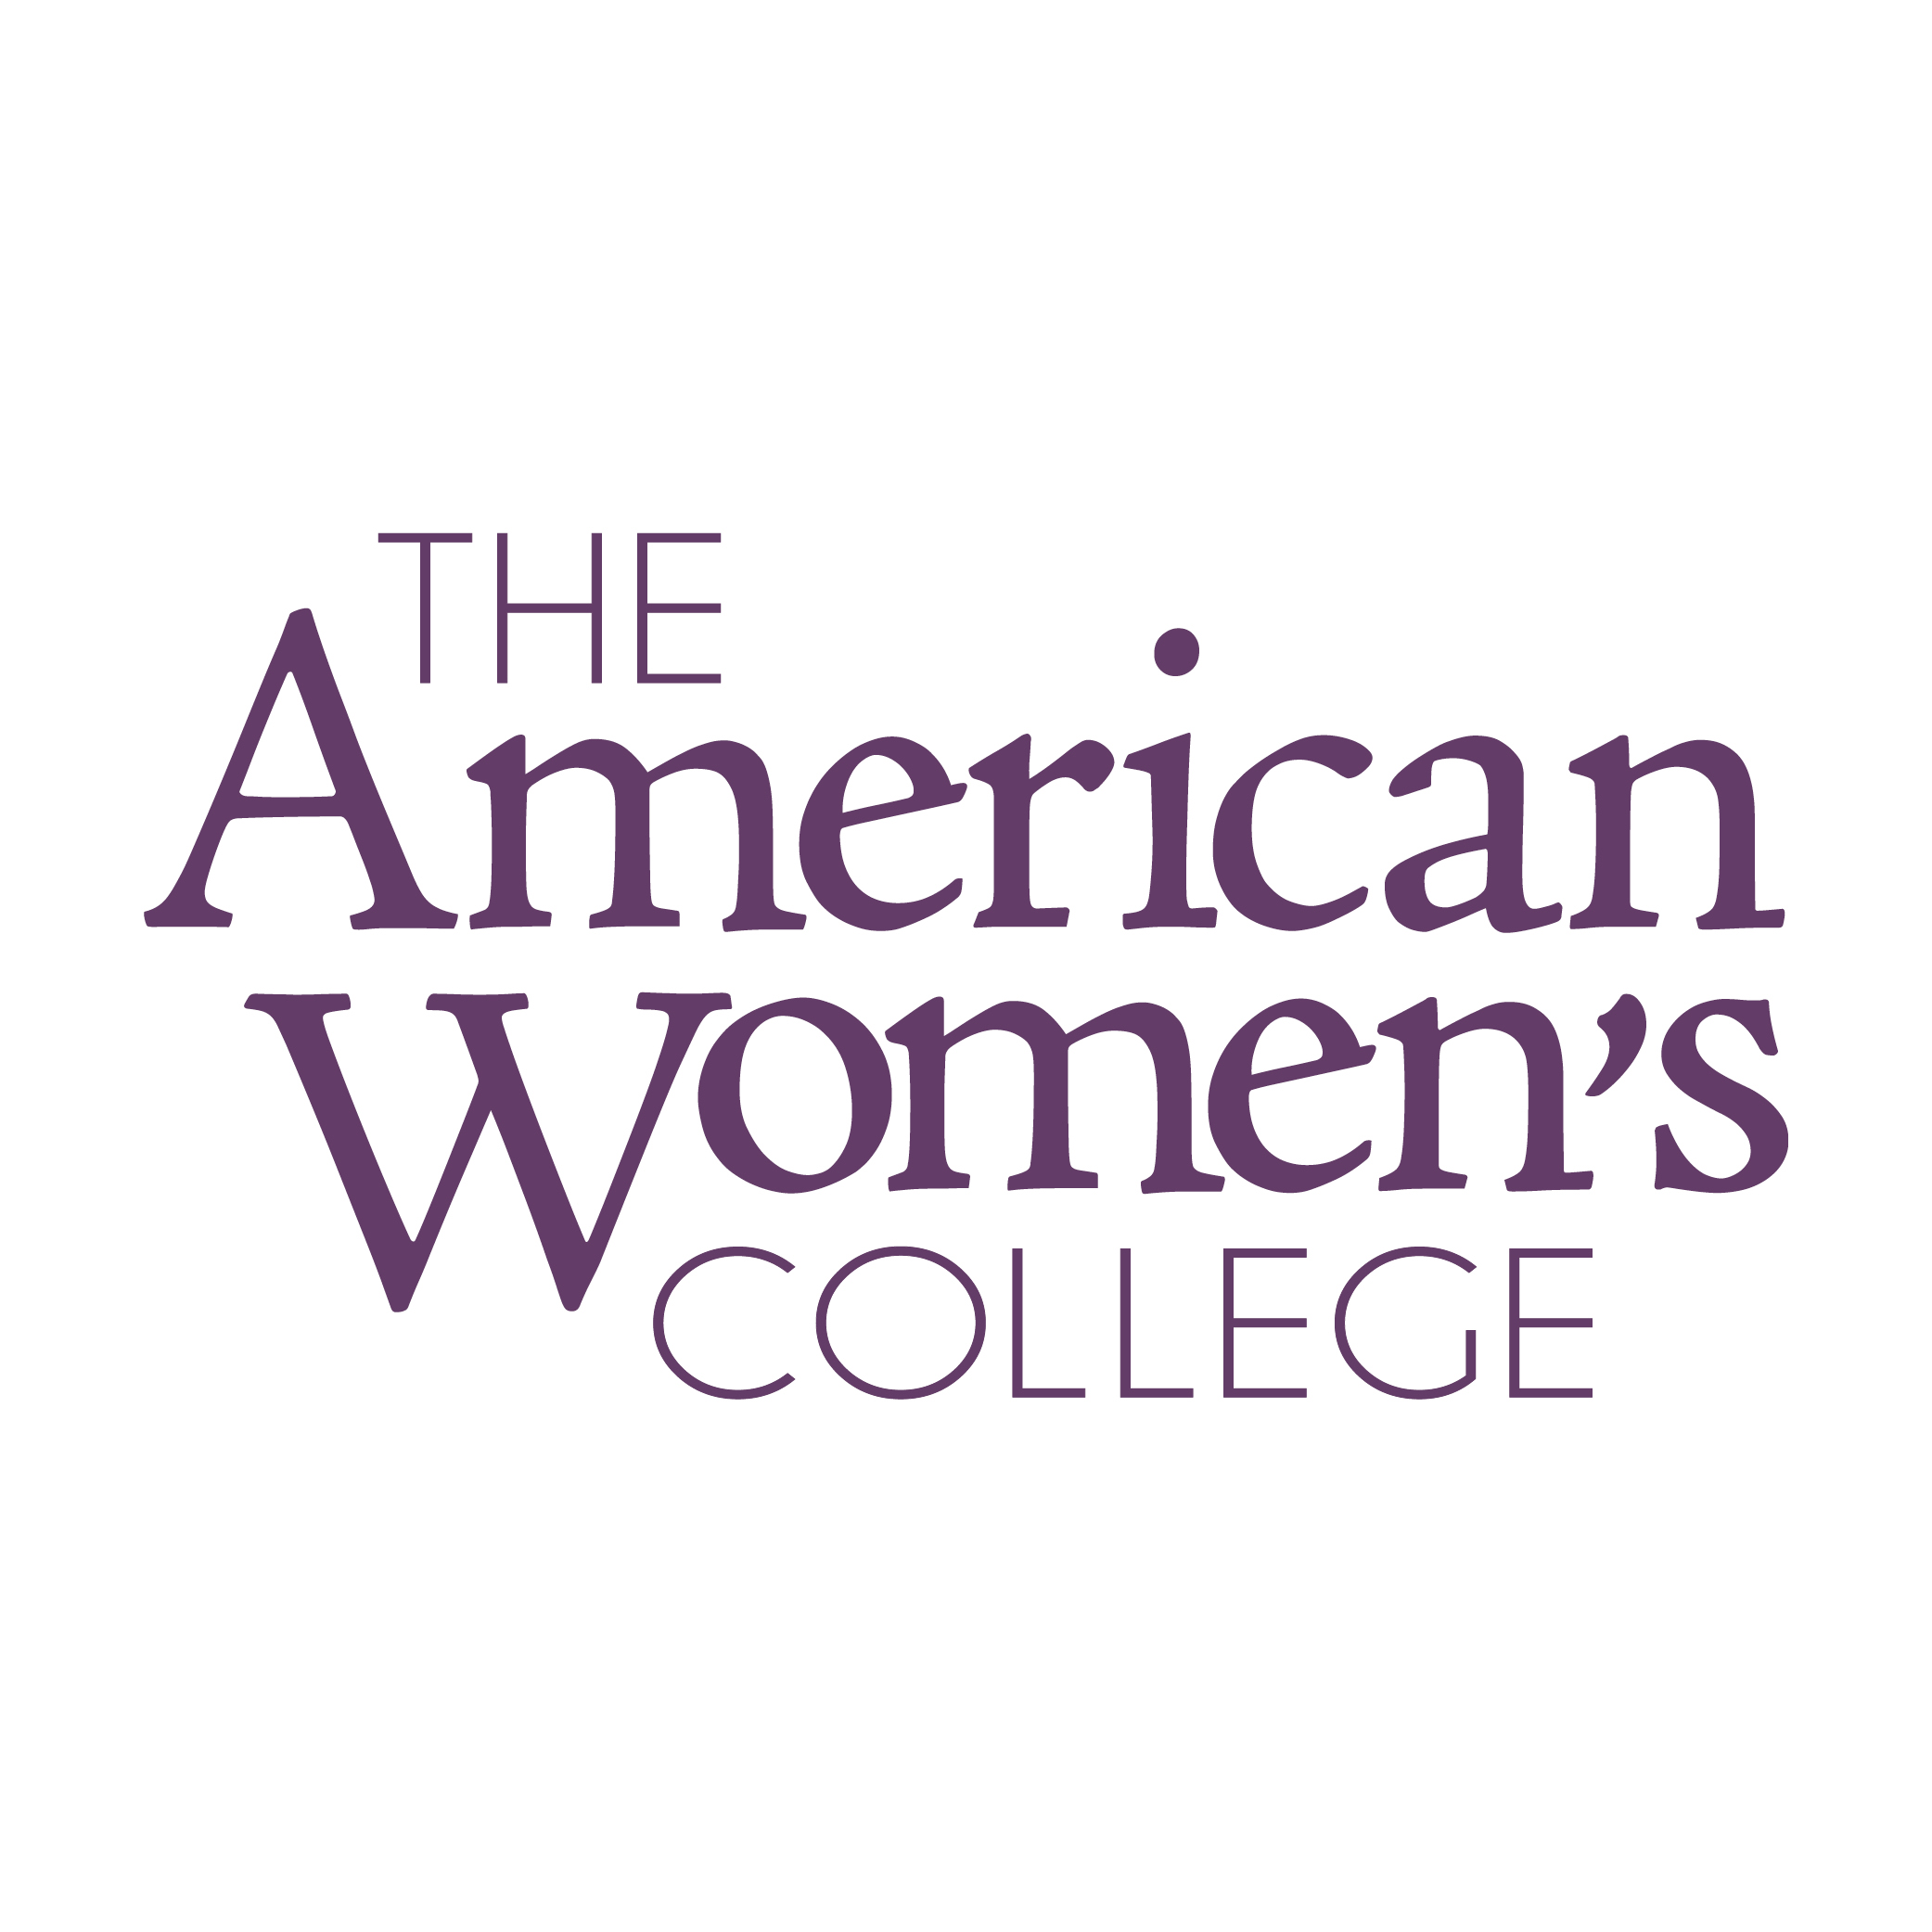 The American Women's College